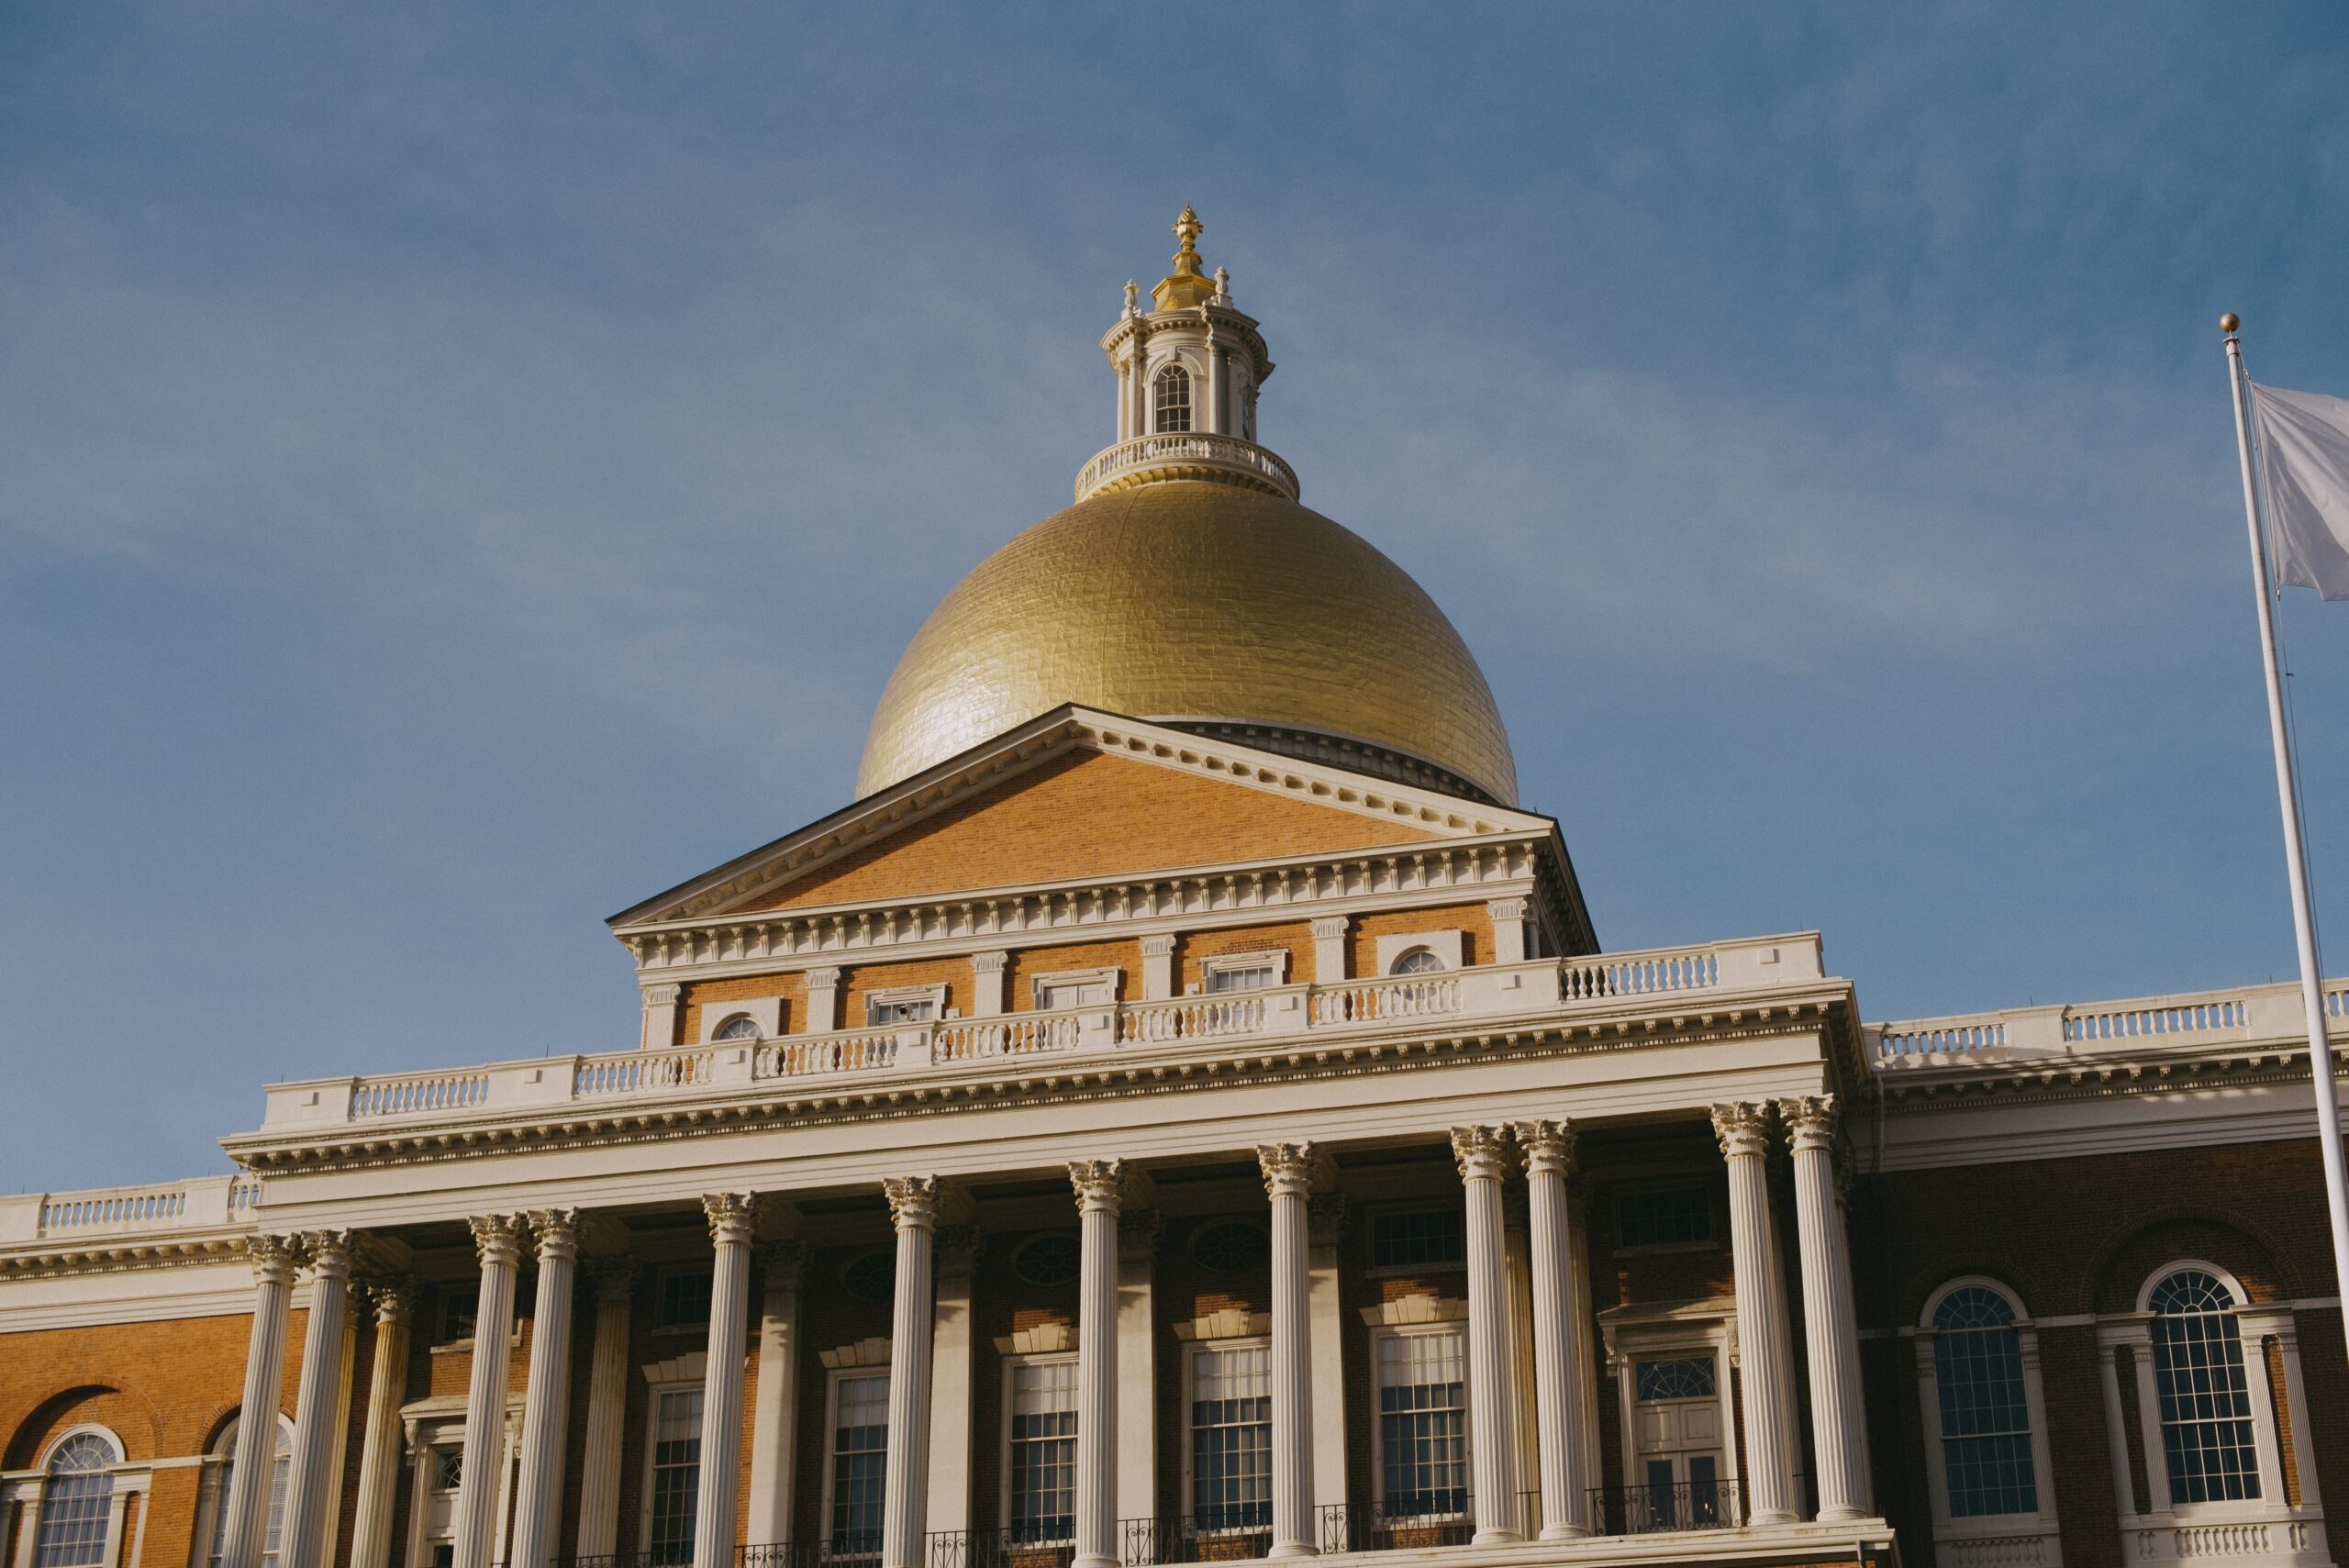 Boston Globe: “Rent control gets renewed push in hesitant Mass. Legislature”